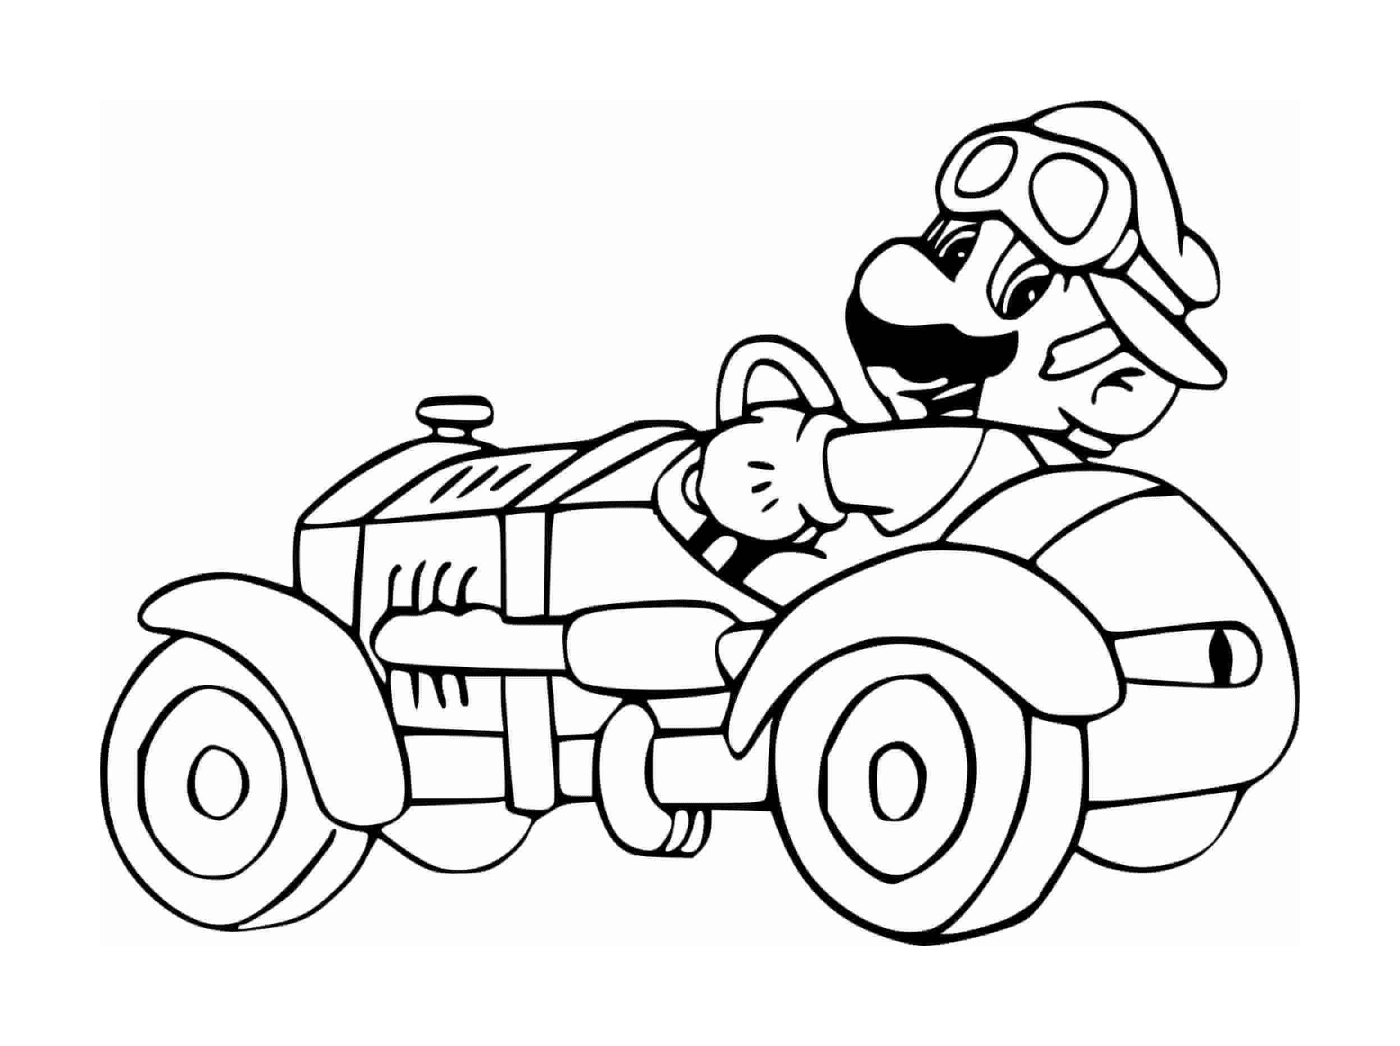  Mario driving a car 